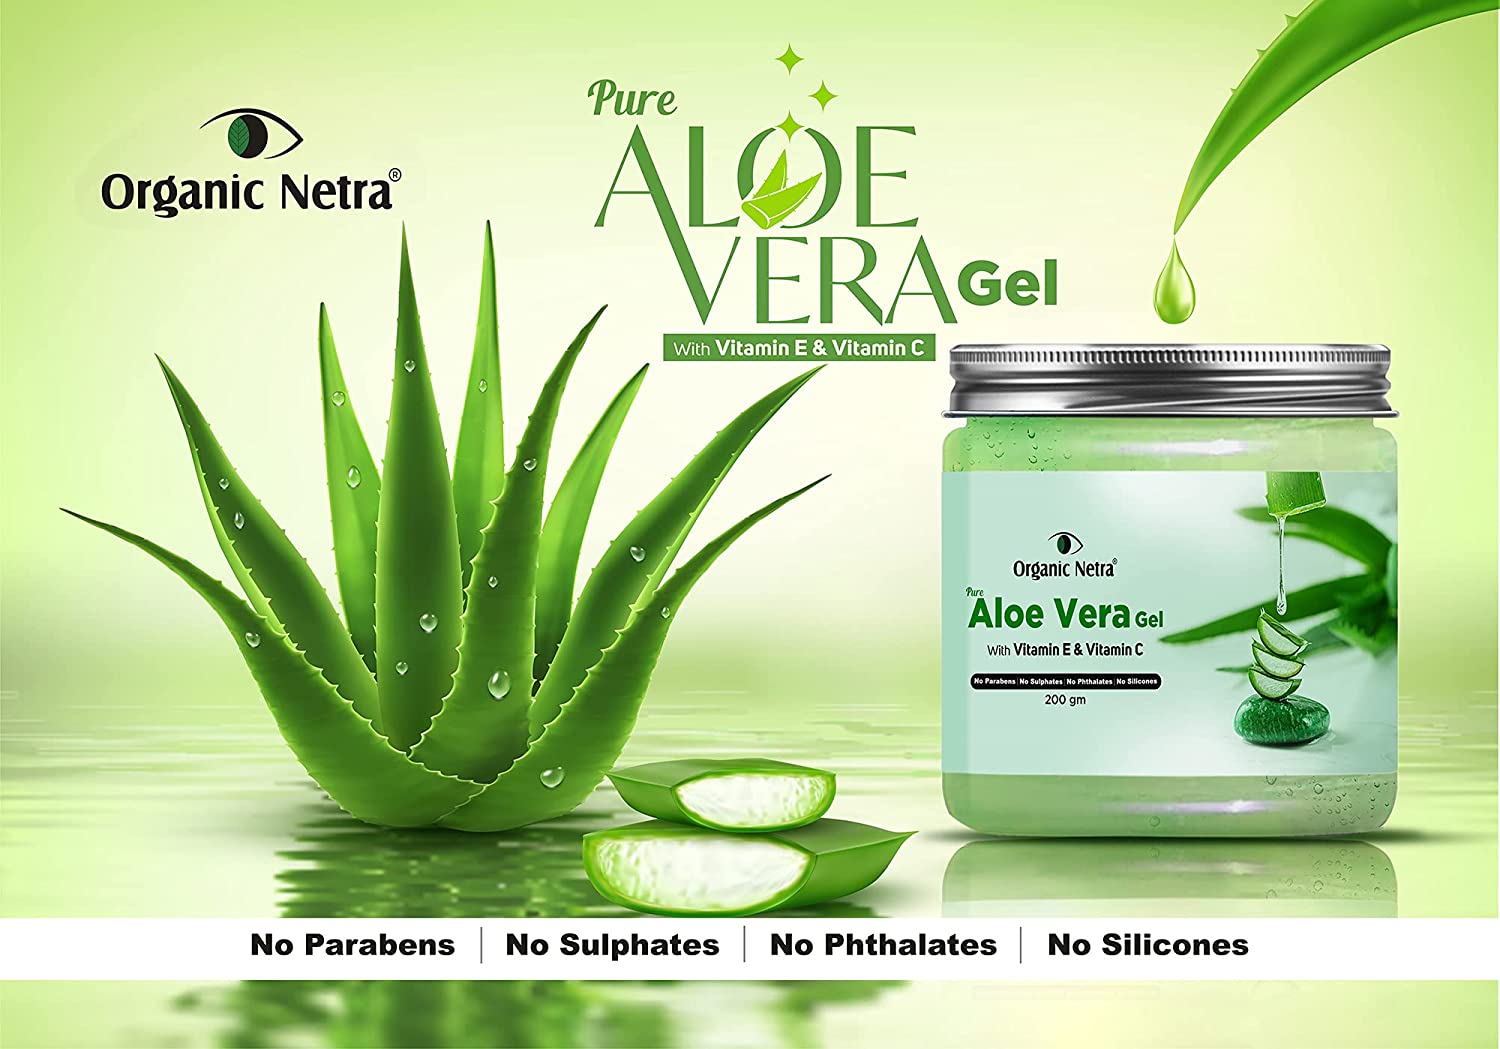 Organic Netra Pure Aloe Vera Gel For Face With Vitamin C And E 200 Gm Organicnetra 3815